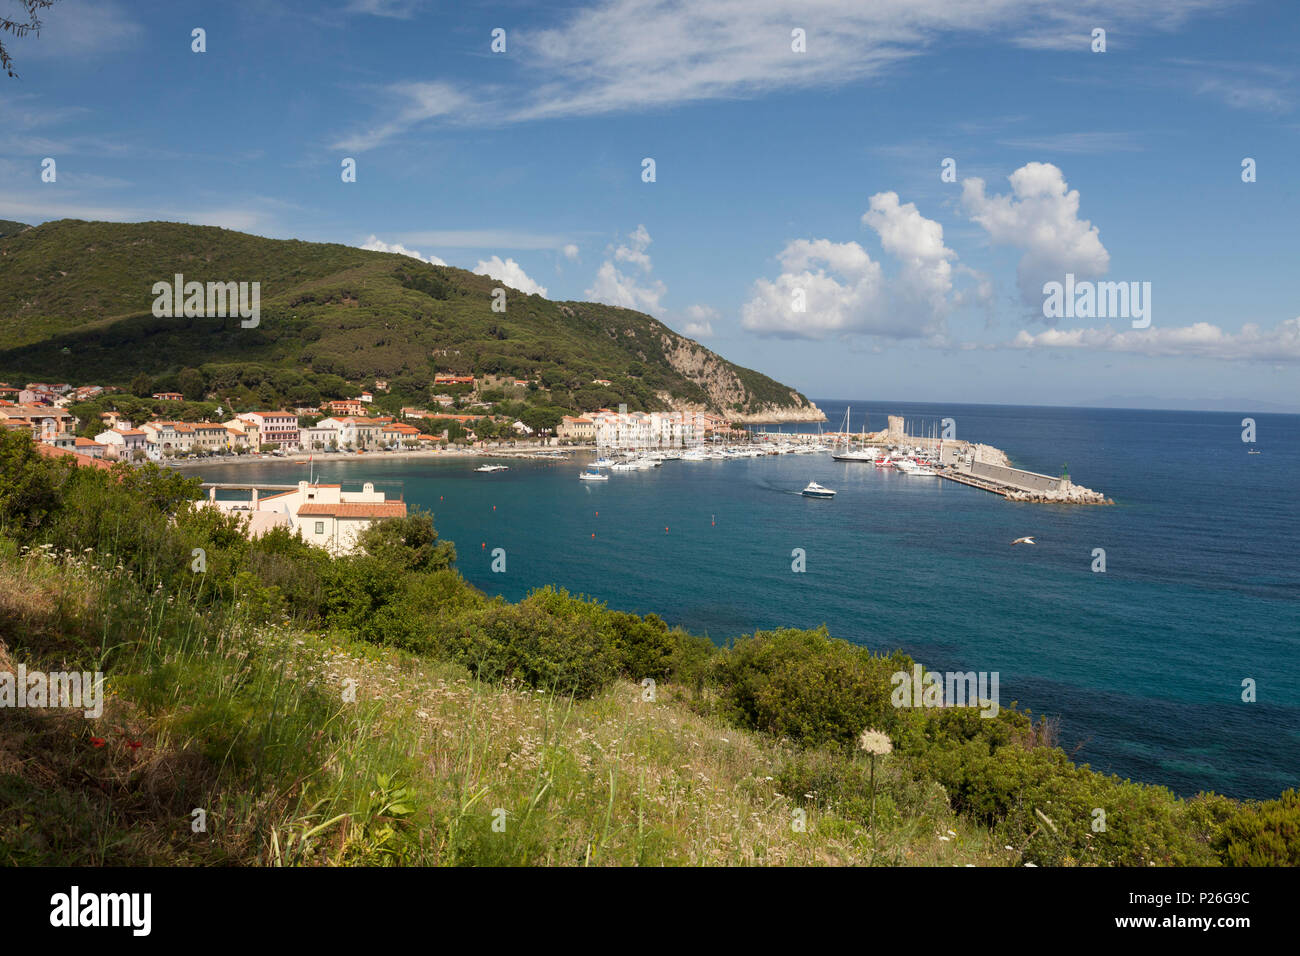 Überblick über den Hafen und das türkisfarbene Meer, Marciana Marina, Insel Elba, Livorno Provinz, Toskana, Italien Stockfoto